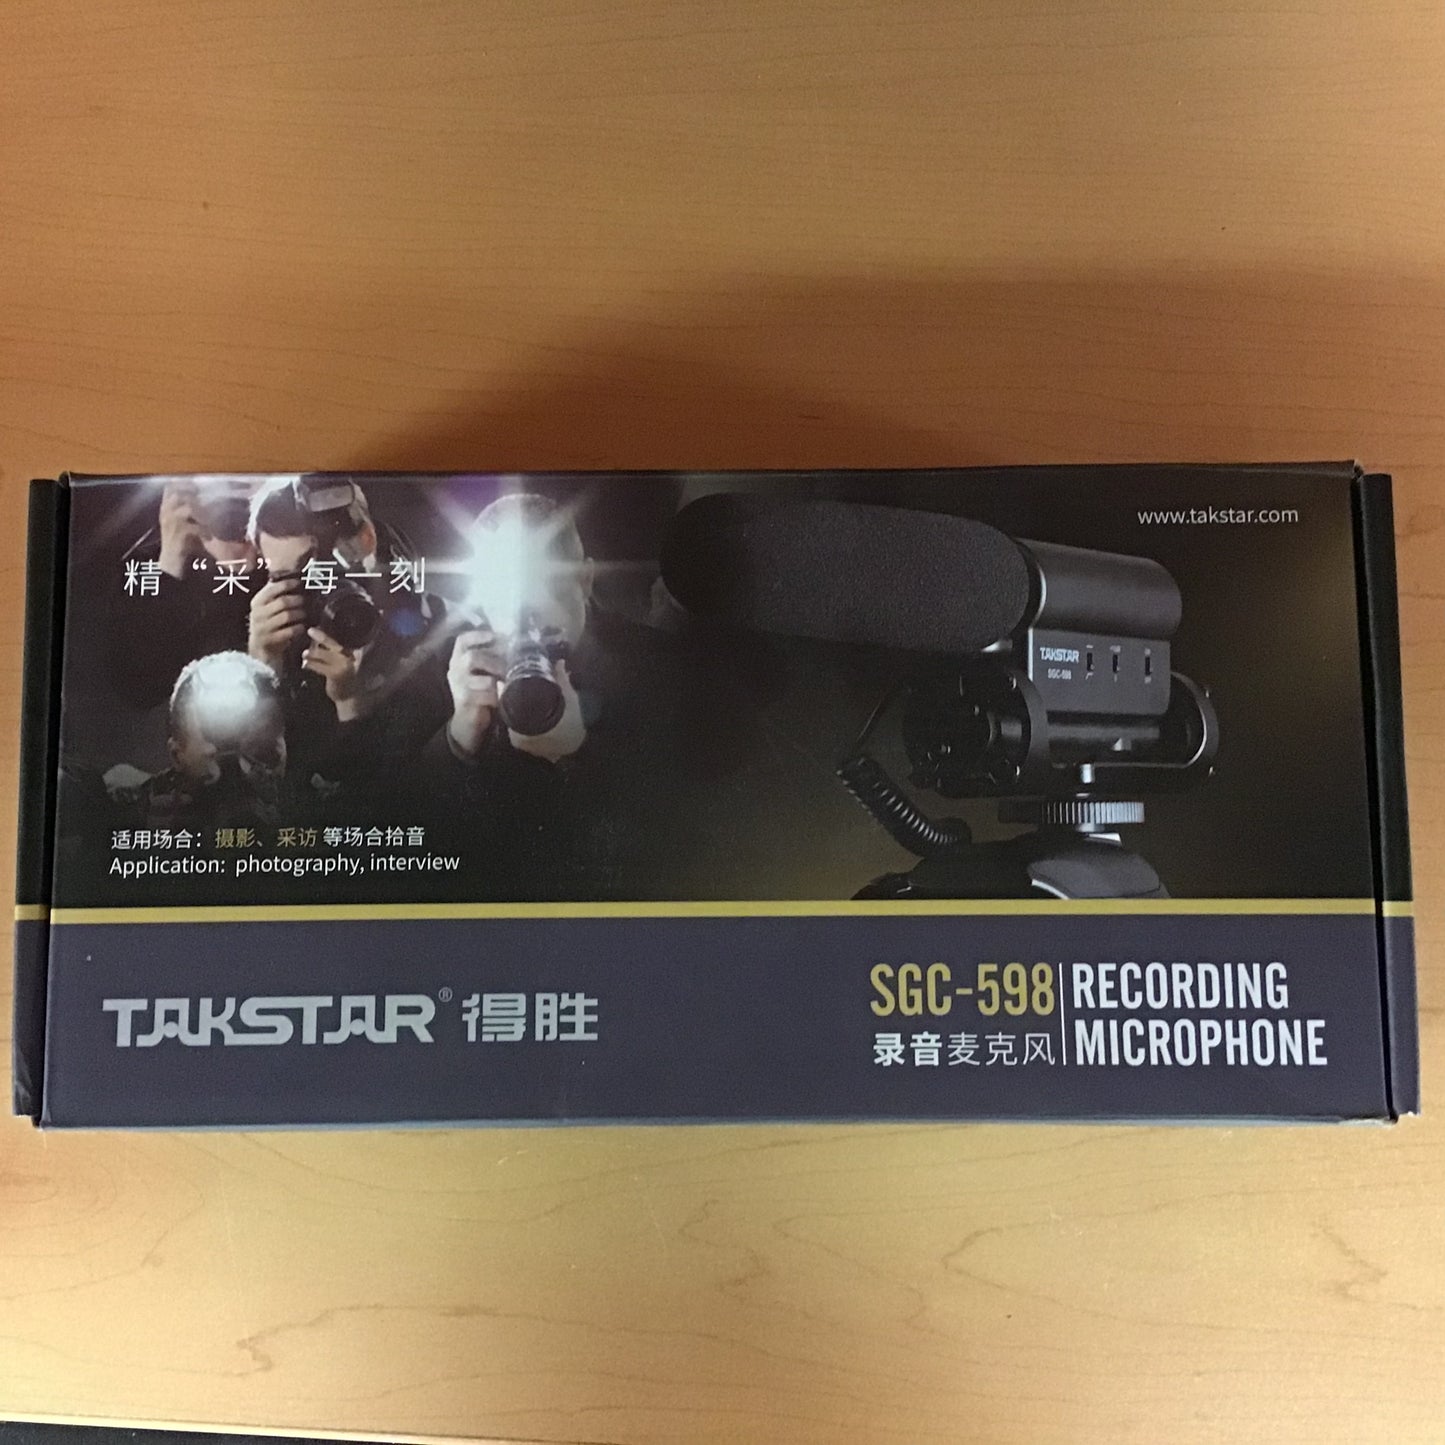 SGC-598 Recording Microphone